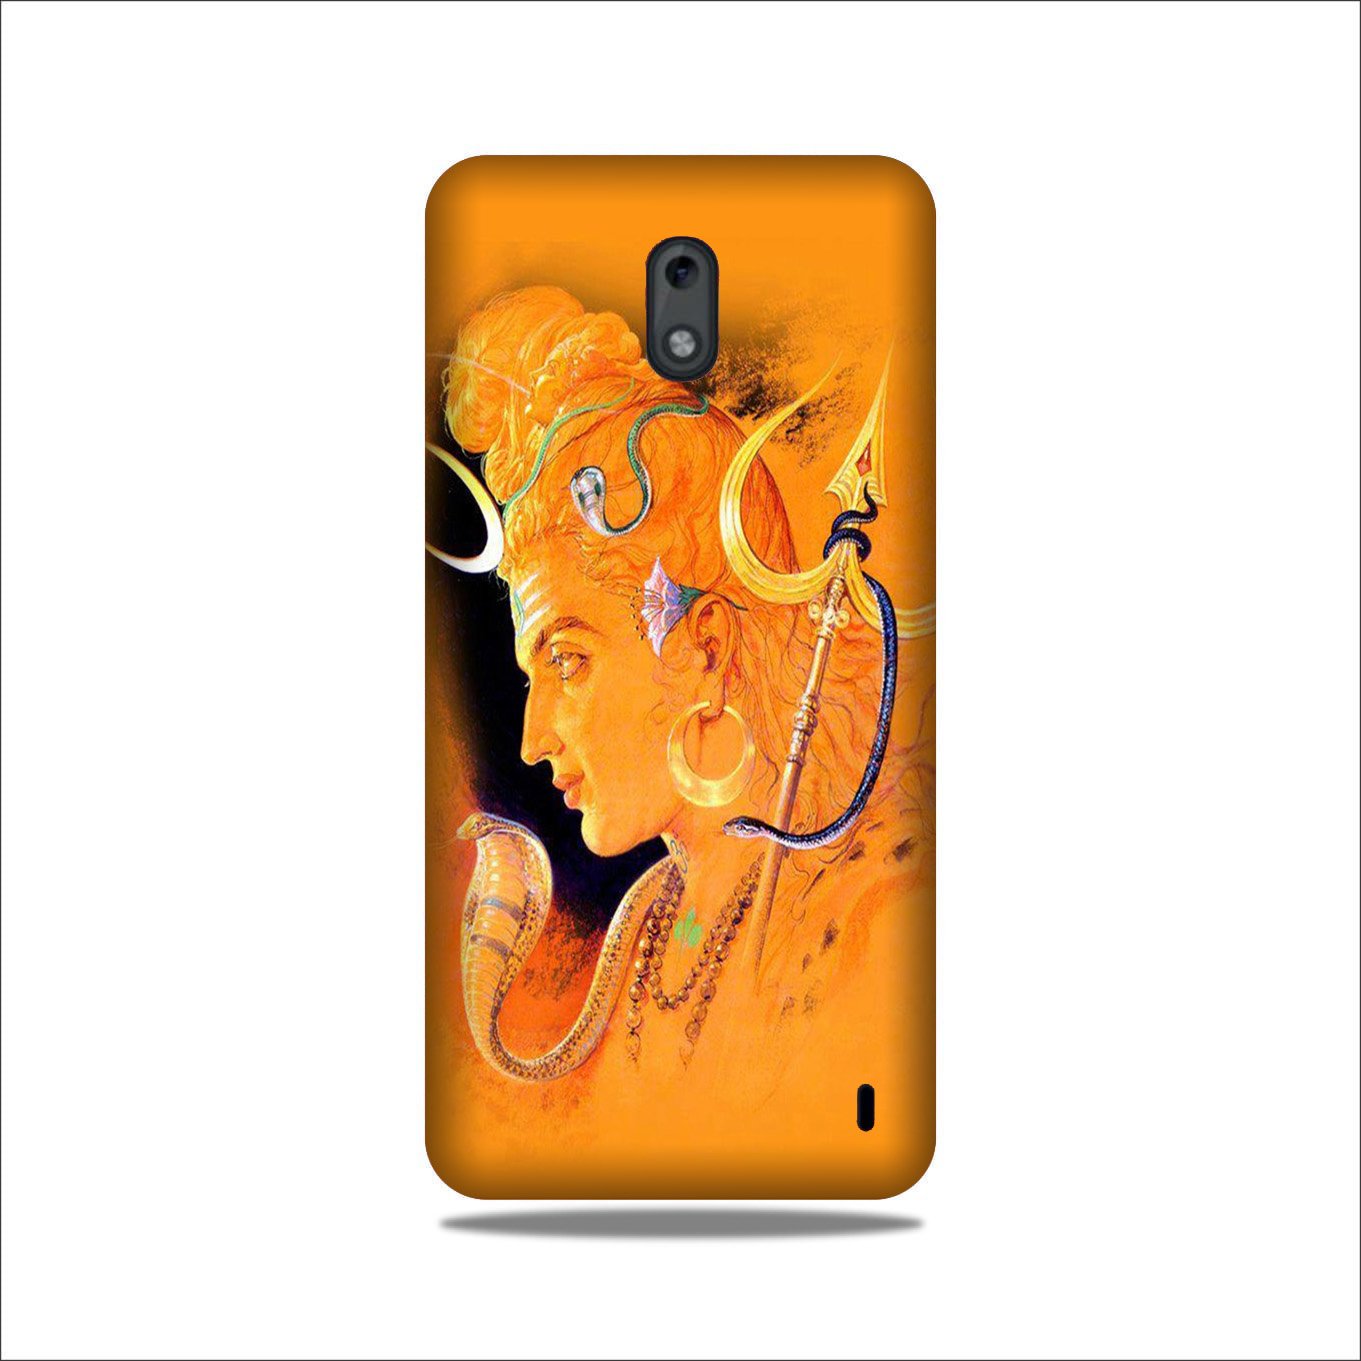 Lord Shiva Case for Nokia 2.2 (Design No. 293)